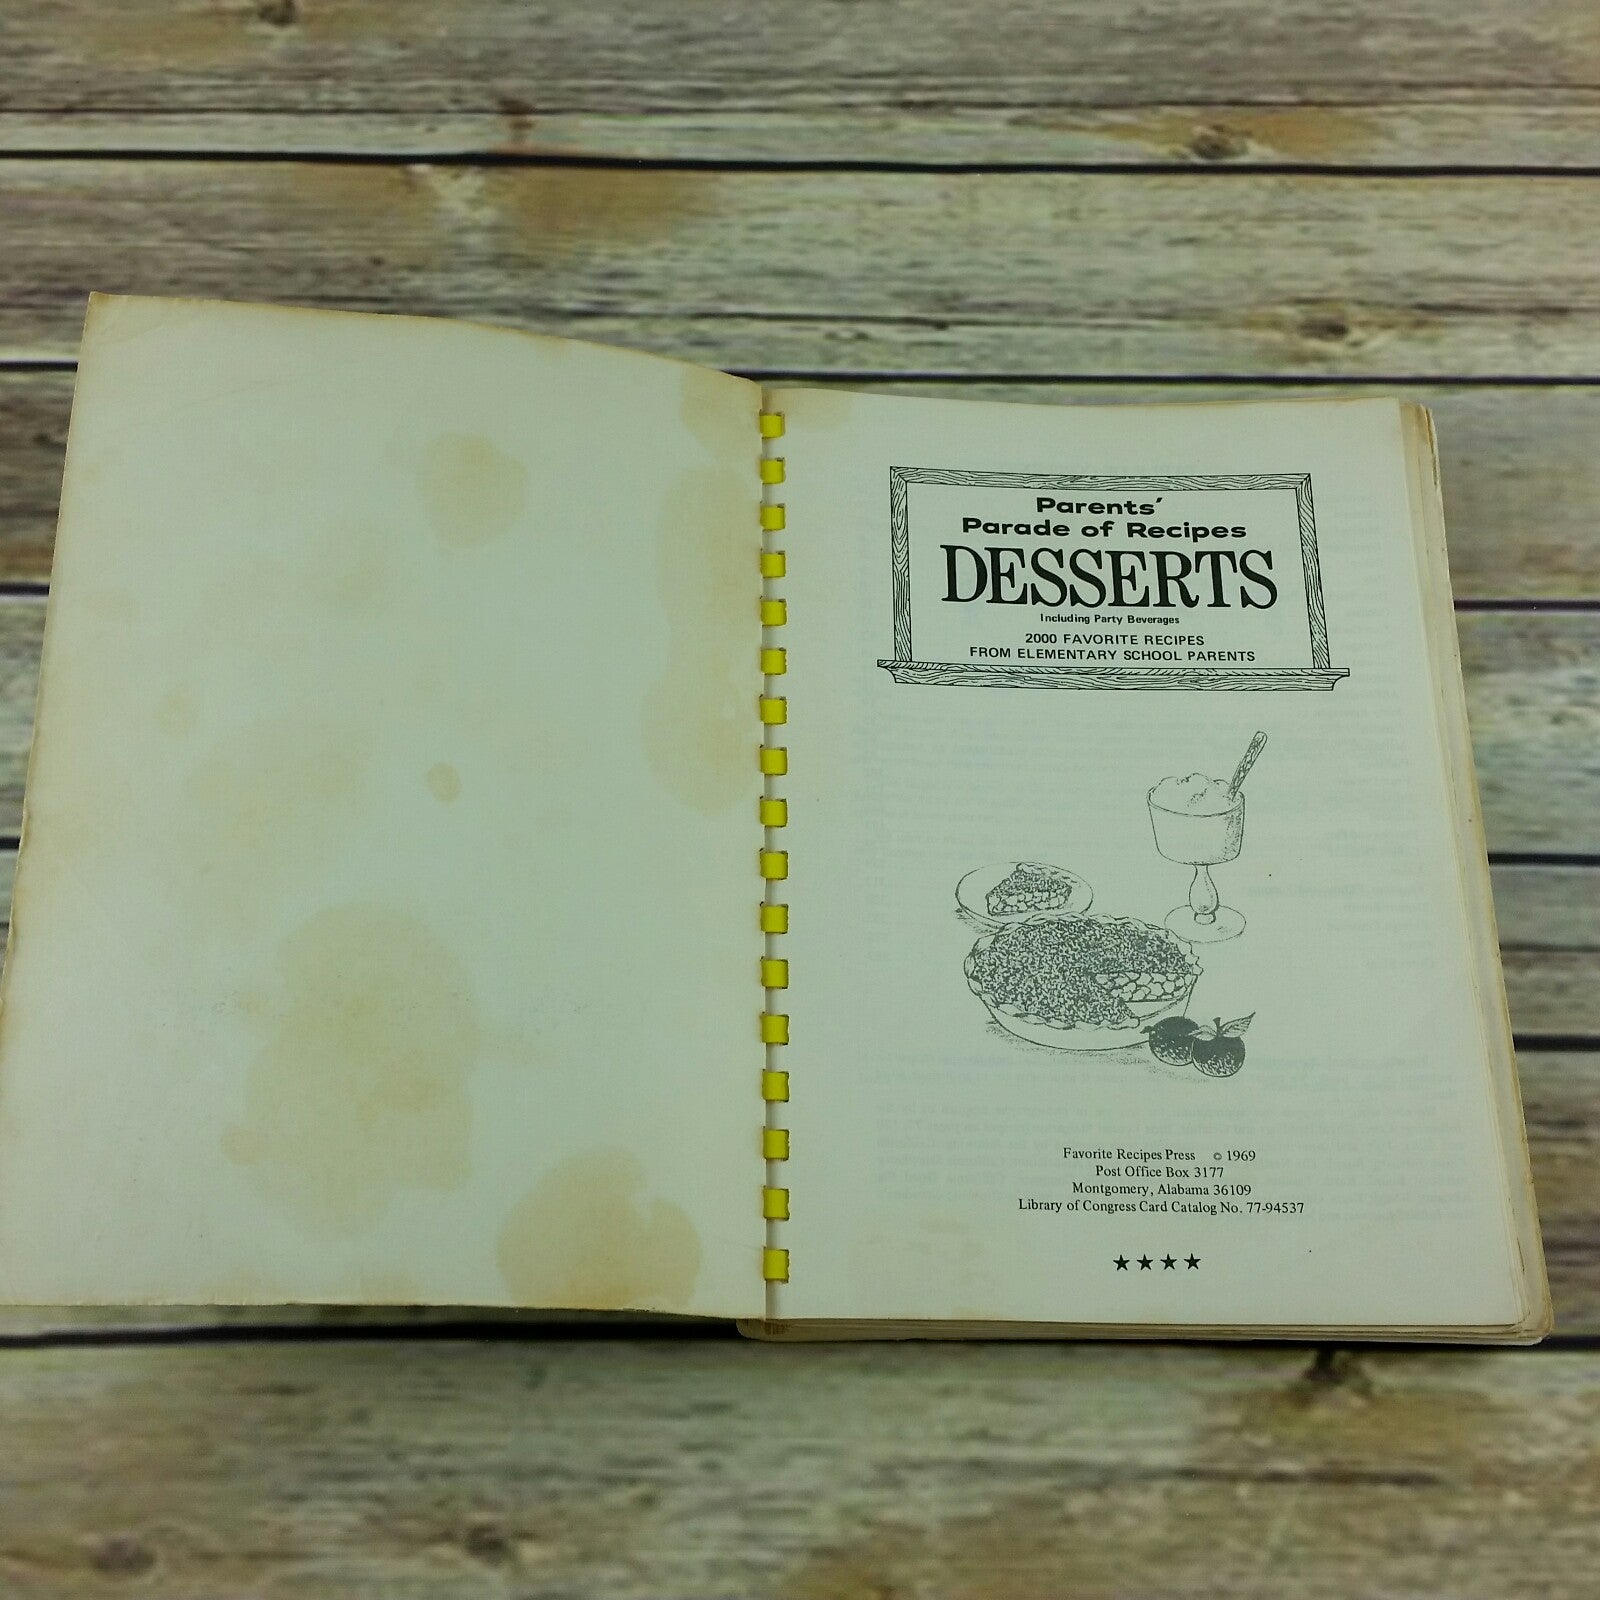 Vintage Cookbook Parents Parade of Recipes Desserts 1969 2000 Favorites Spiral Bound - At Grandma's Table